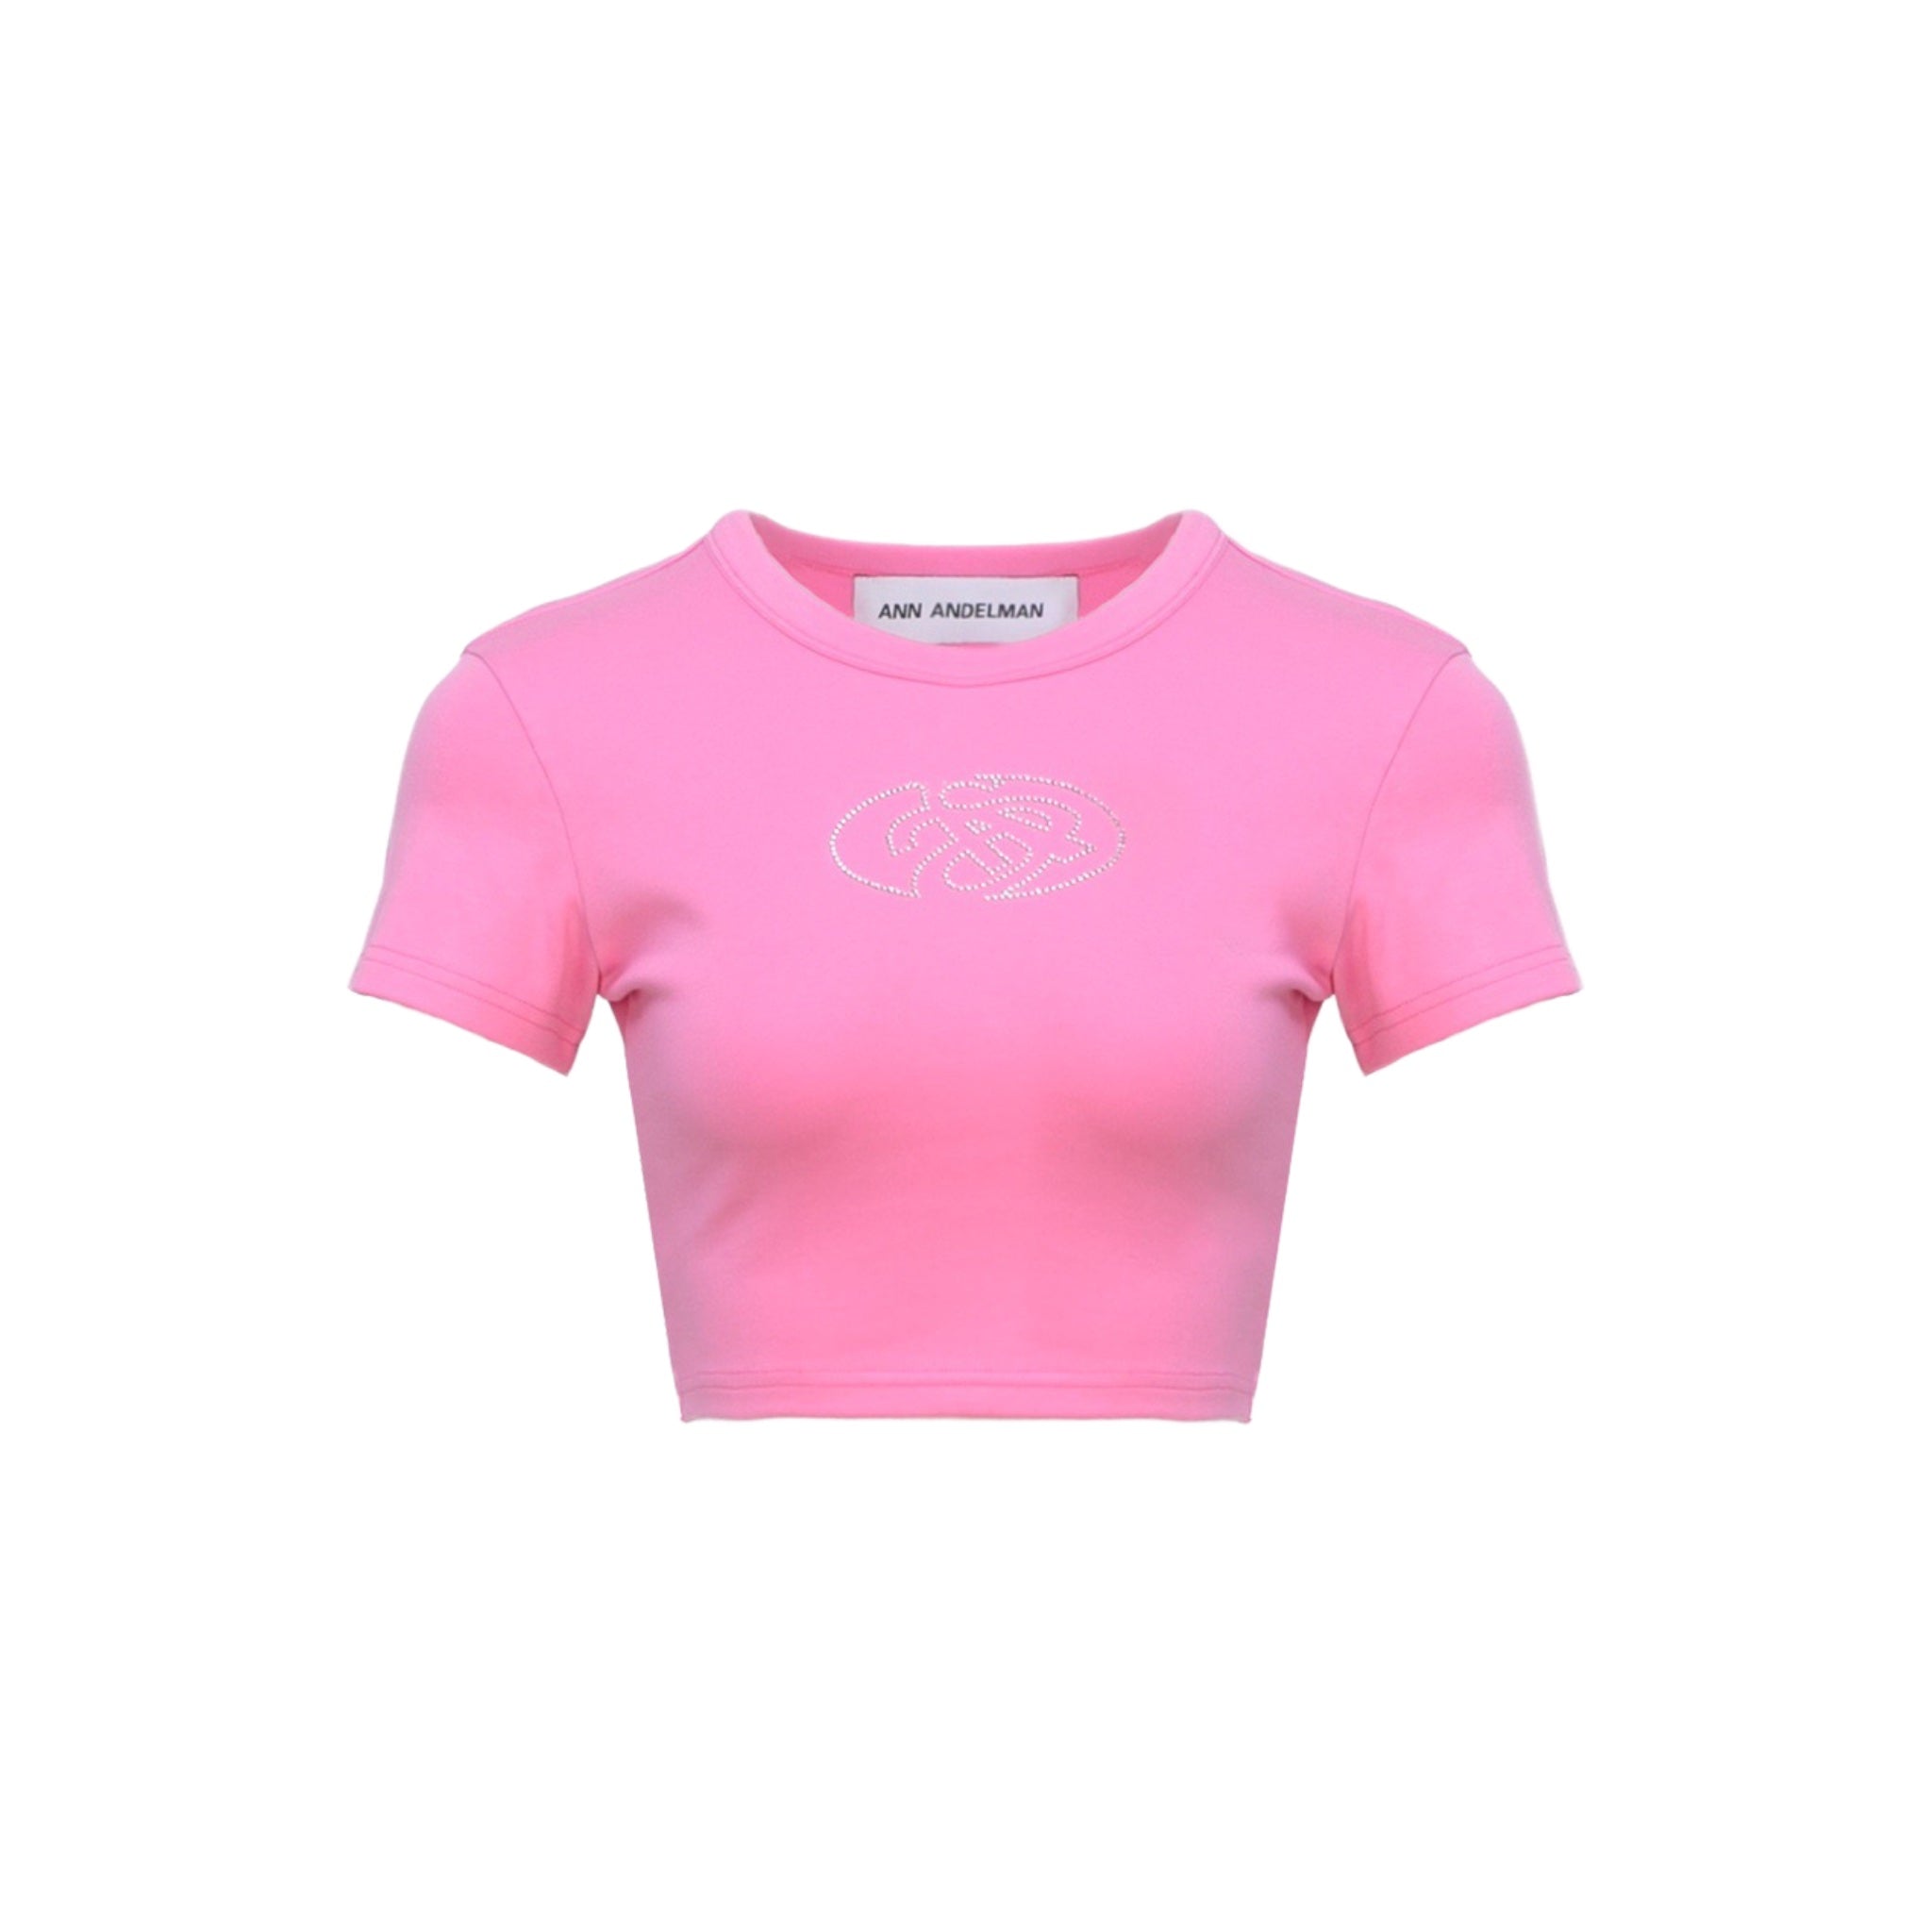 ANN ANDELMAN Short Sleeve with Diamond Logo Tee Pink | MADA IN CHINA